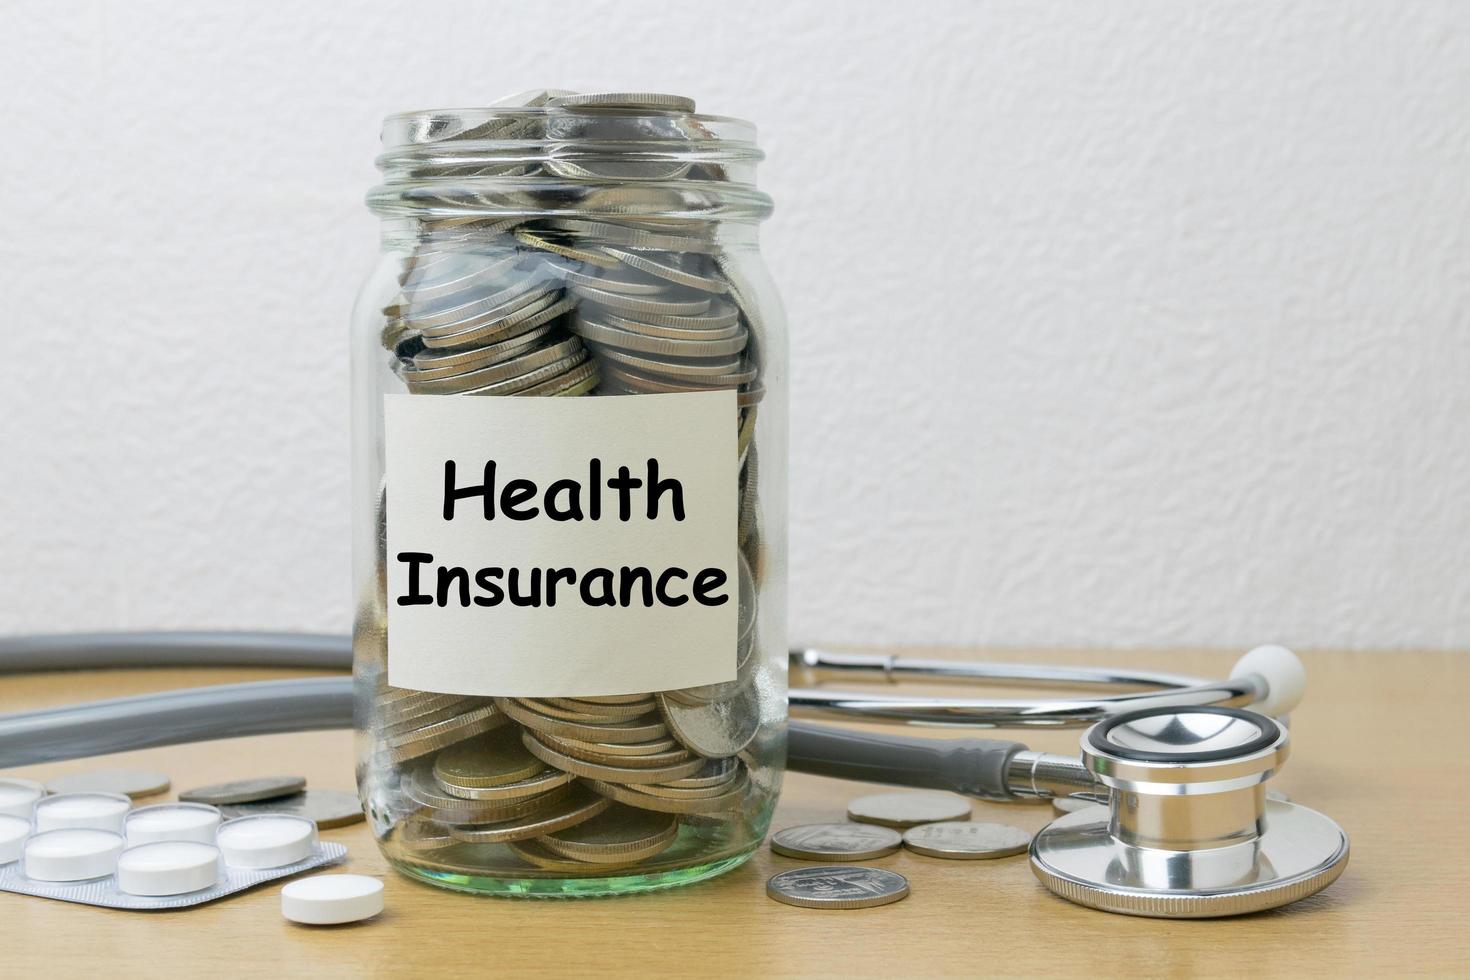 Money saving for health Insurance in the glass bottle photo